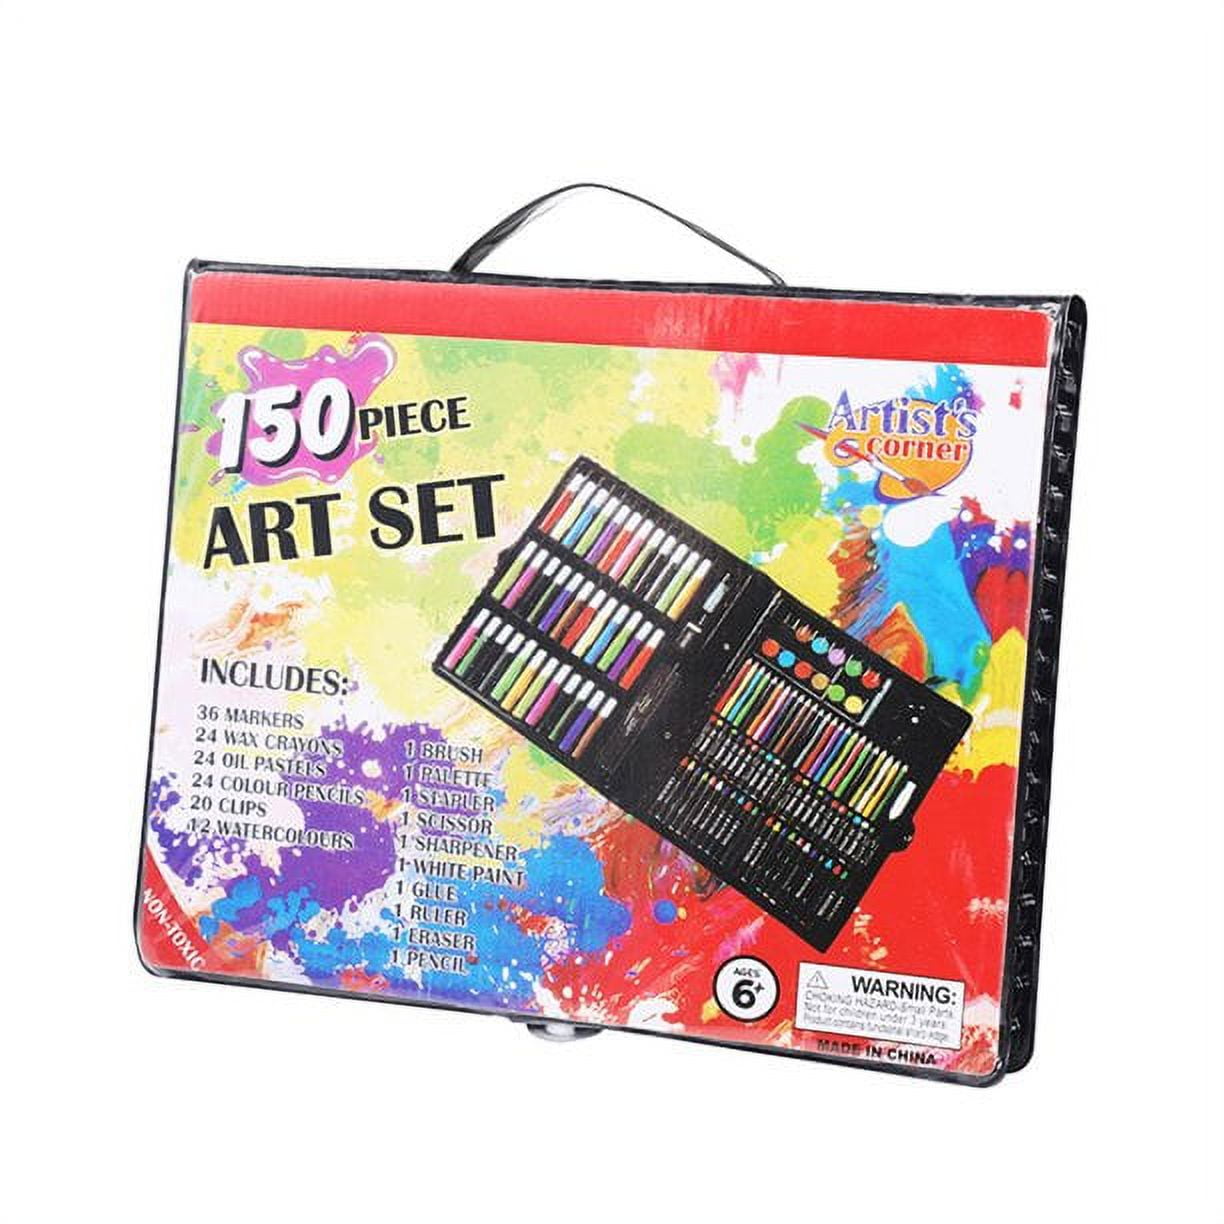  GOTIDEAL Drawing Art kit for Kids Ages 8-12, Art Set